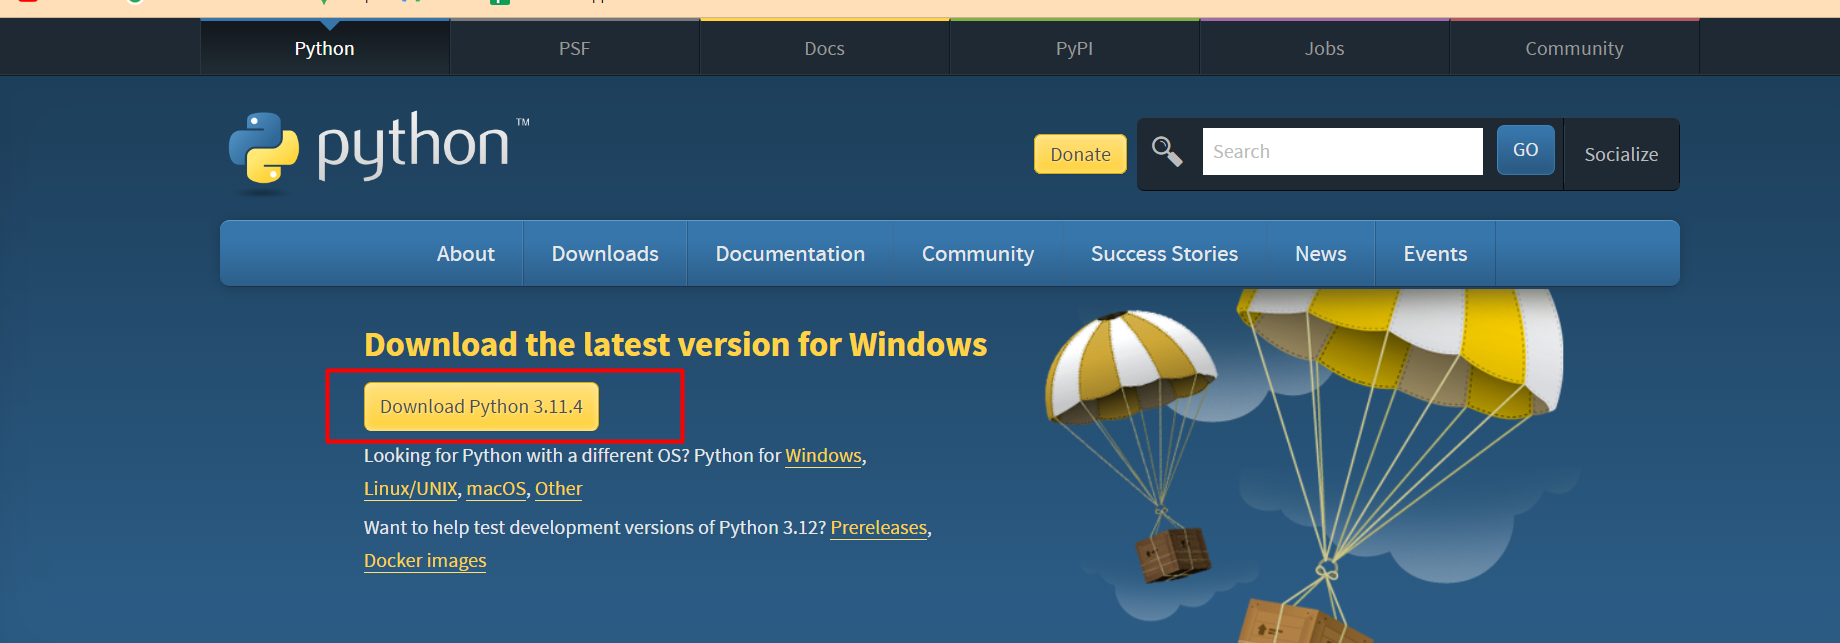 image of Python latest version for Windows